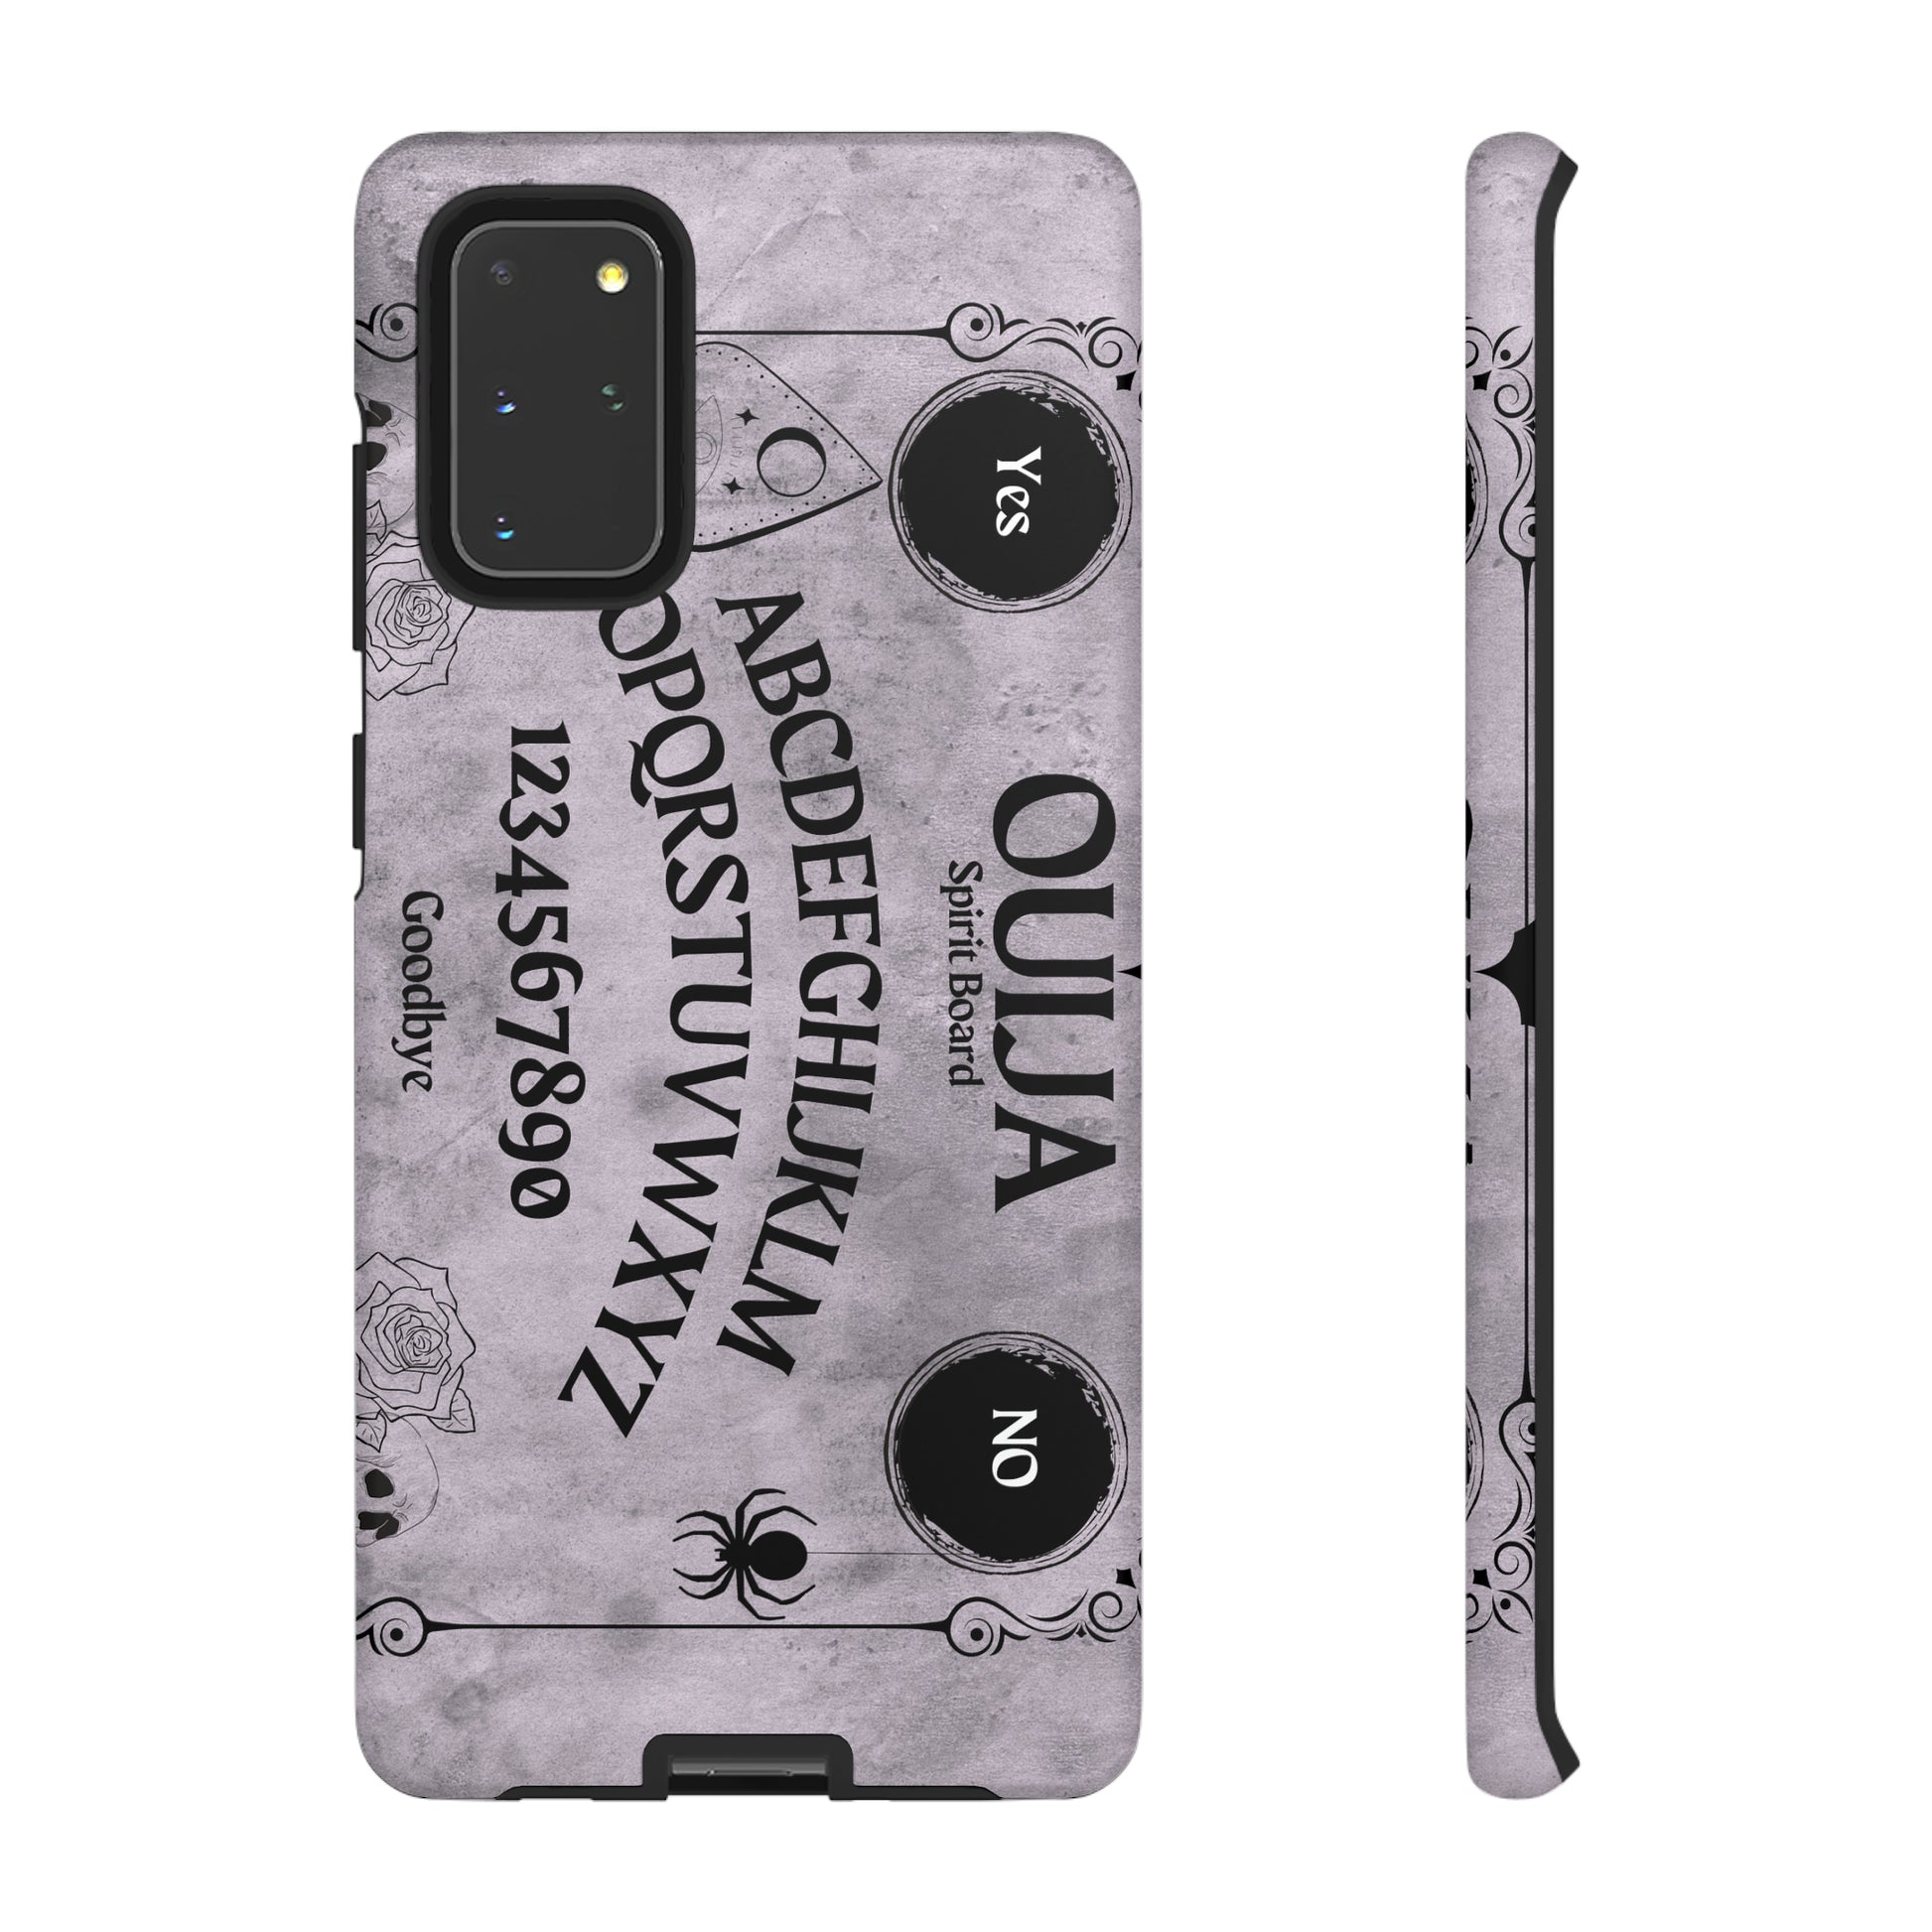 Ouija Board Tough Phone Cases For Samsung iPhone GooglePhone CaseVTZdesignsSamsung Galaxy S20+MatteAccessoriesGlossyhalloween